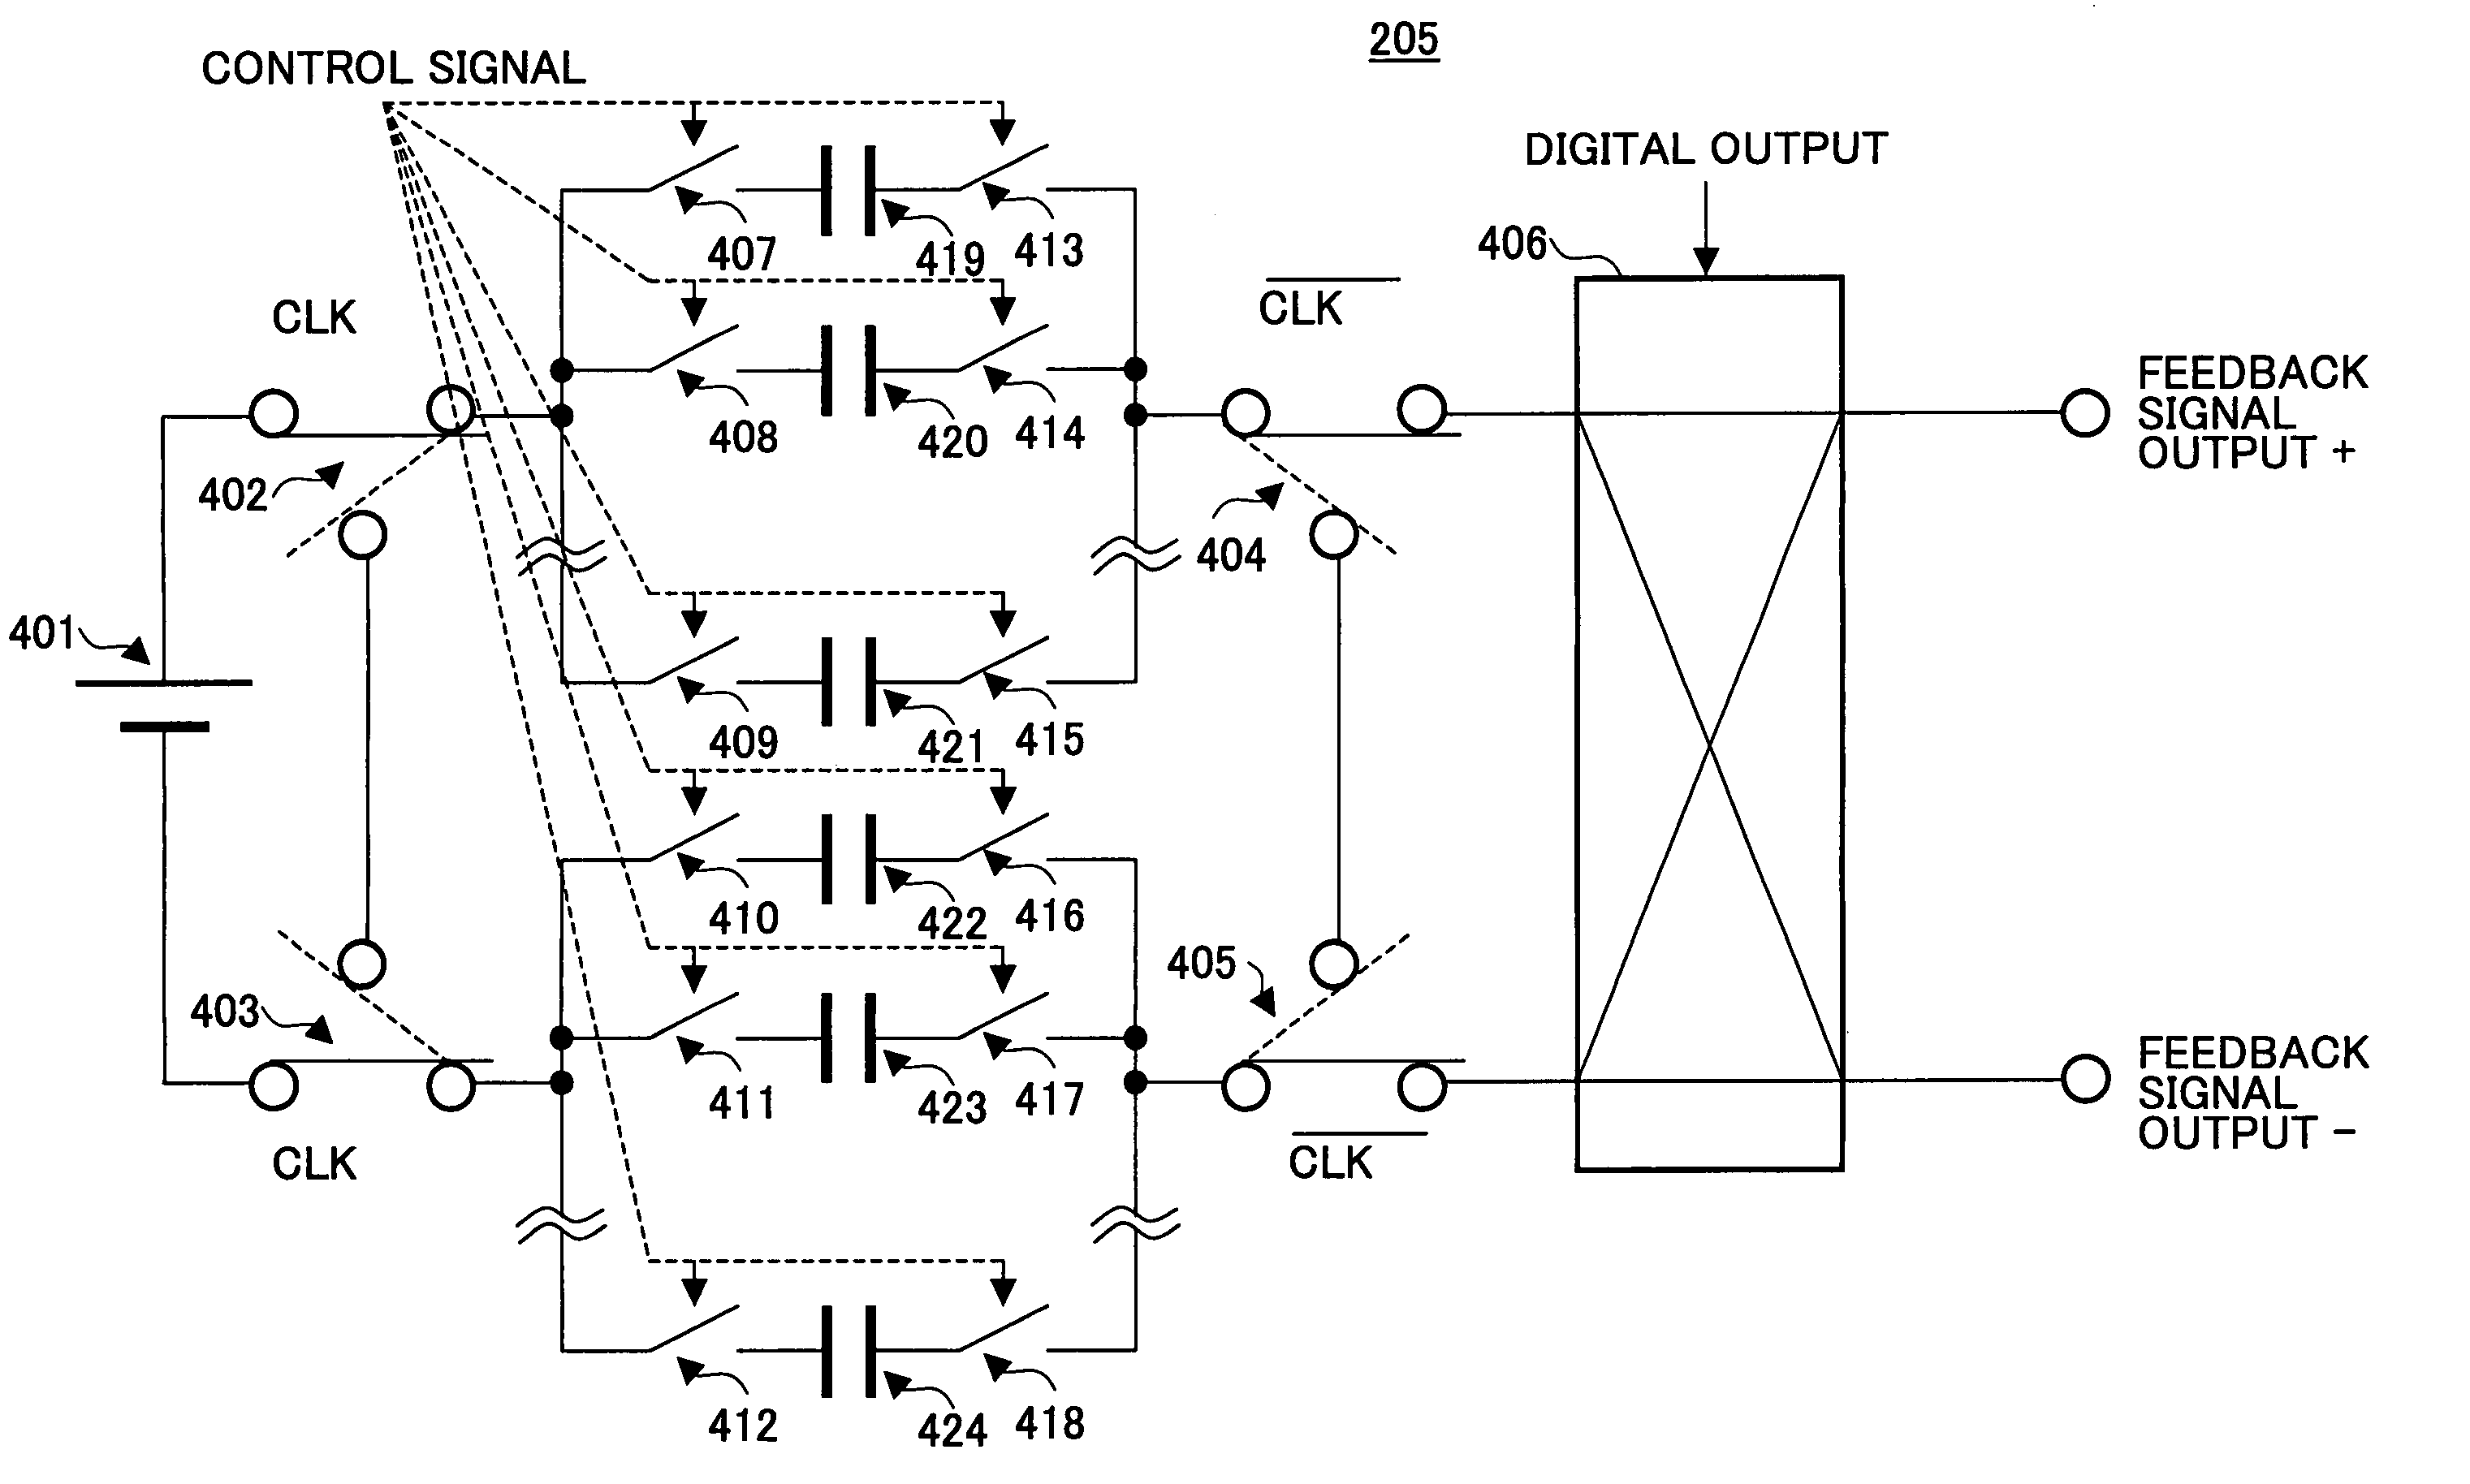 Adaptive-type sigma-delta A/D converter